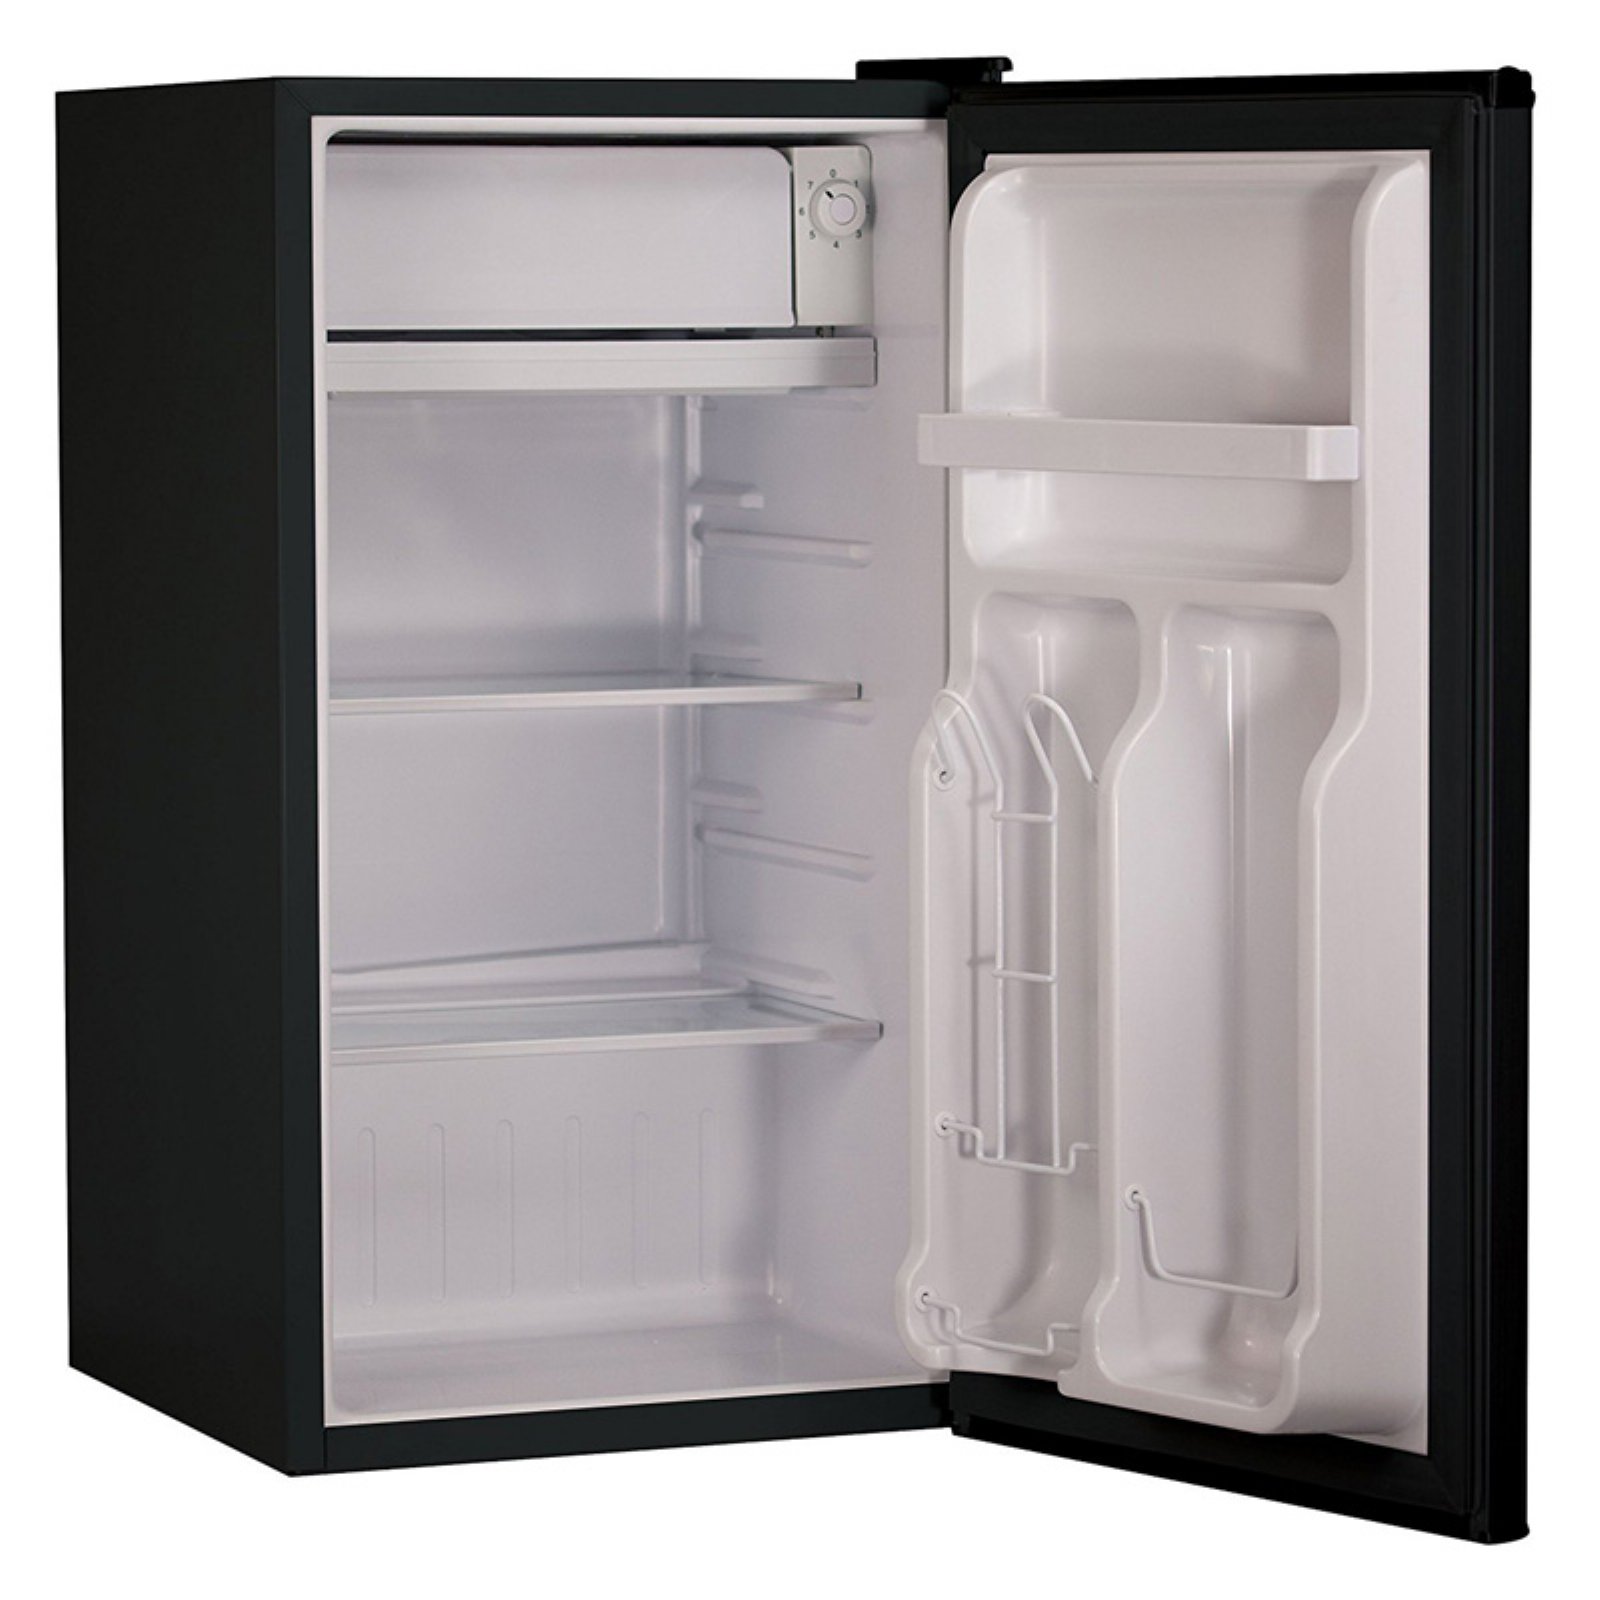 BLACK+DECKER BCRK32V Compact Refrigerator Energy Star Single Door Mini Fridge with Freezer, 3.2 cu. ft., Silver - image 2 of 6